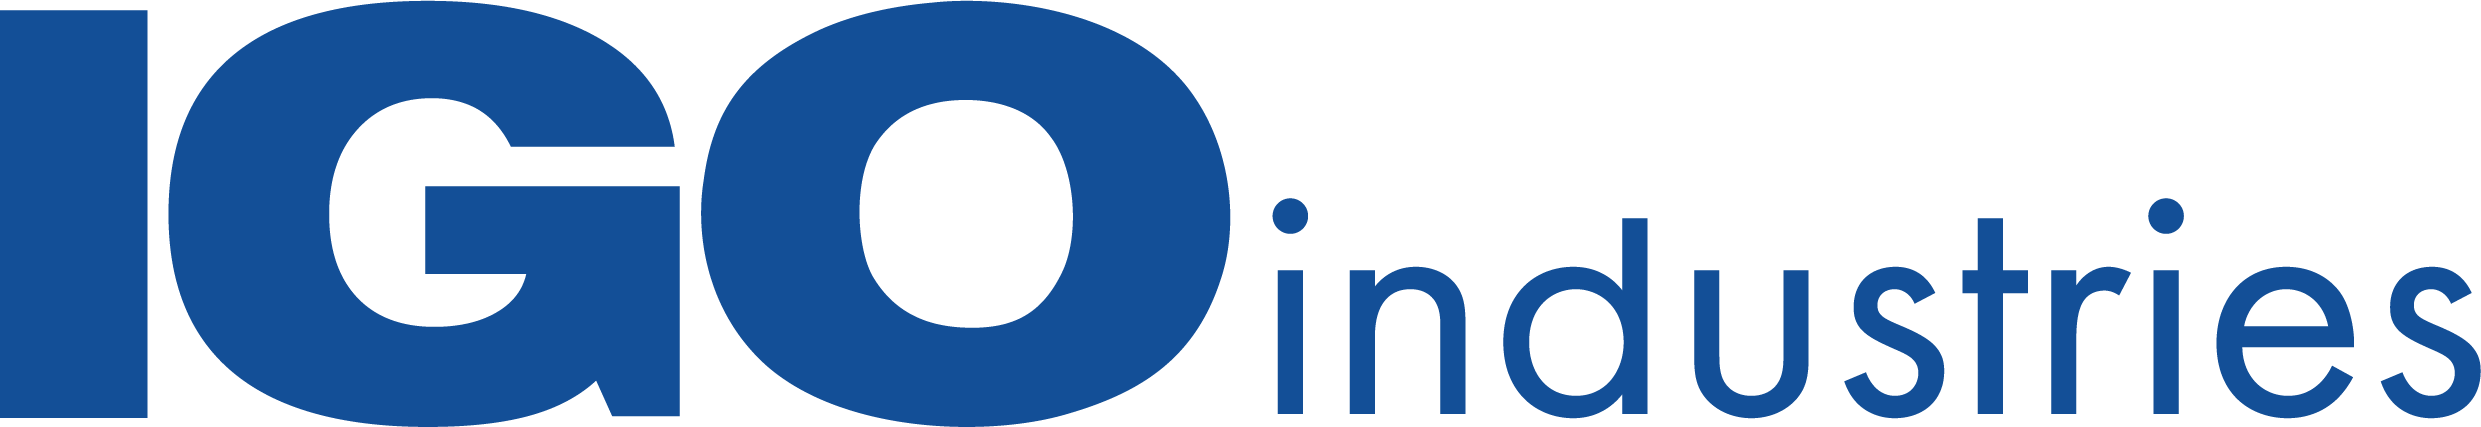 IGO Industries Logo